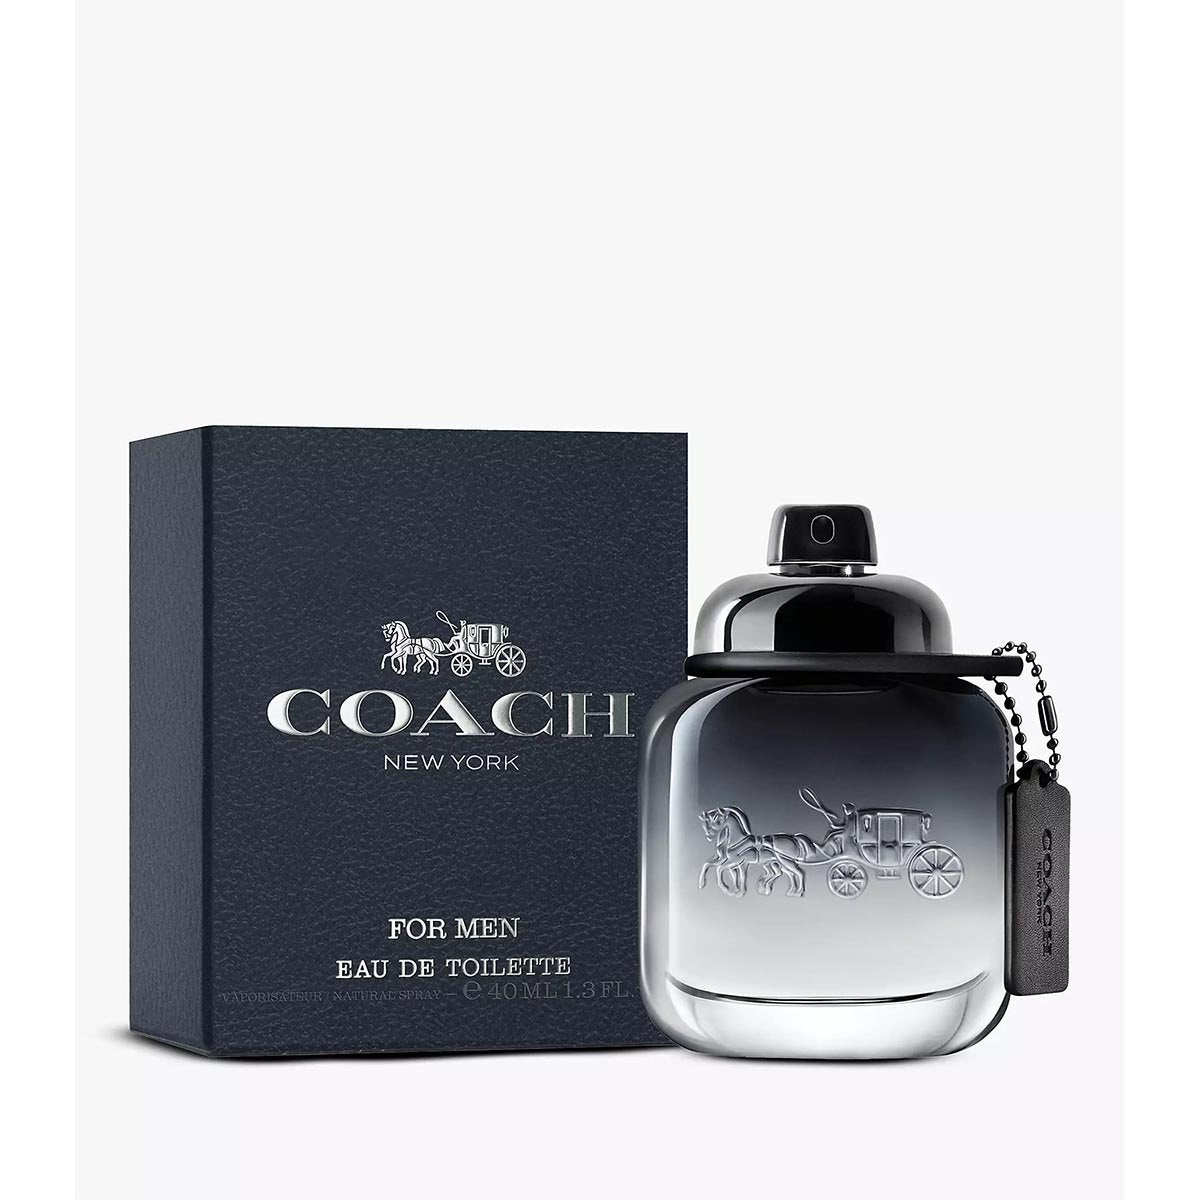 Coach New York For Men EDT Gift Set - My Perfume Shop Australia